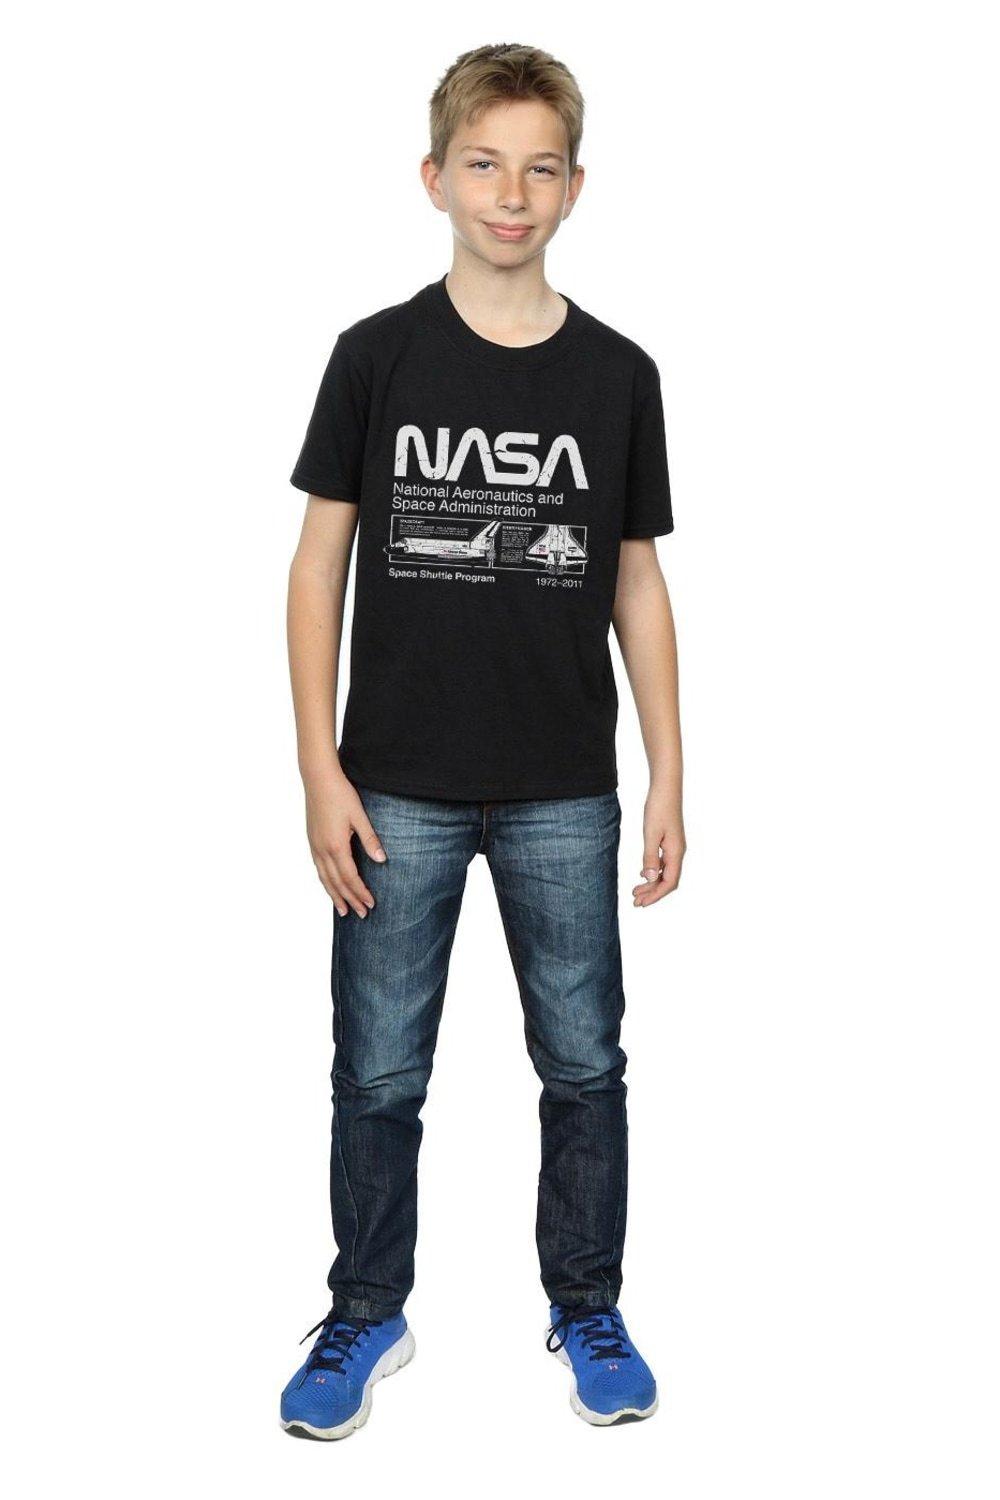 Classic Space Shuttle T-Shirt